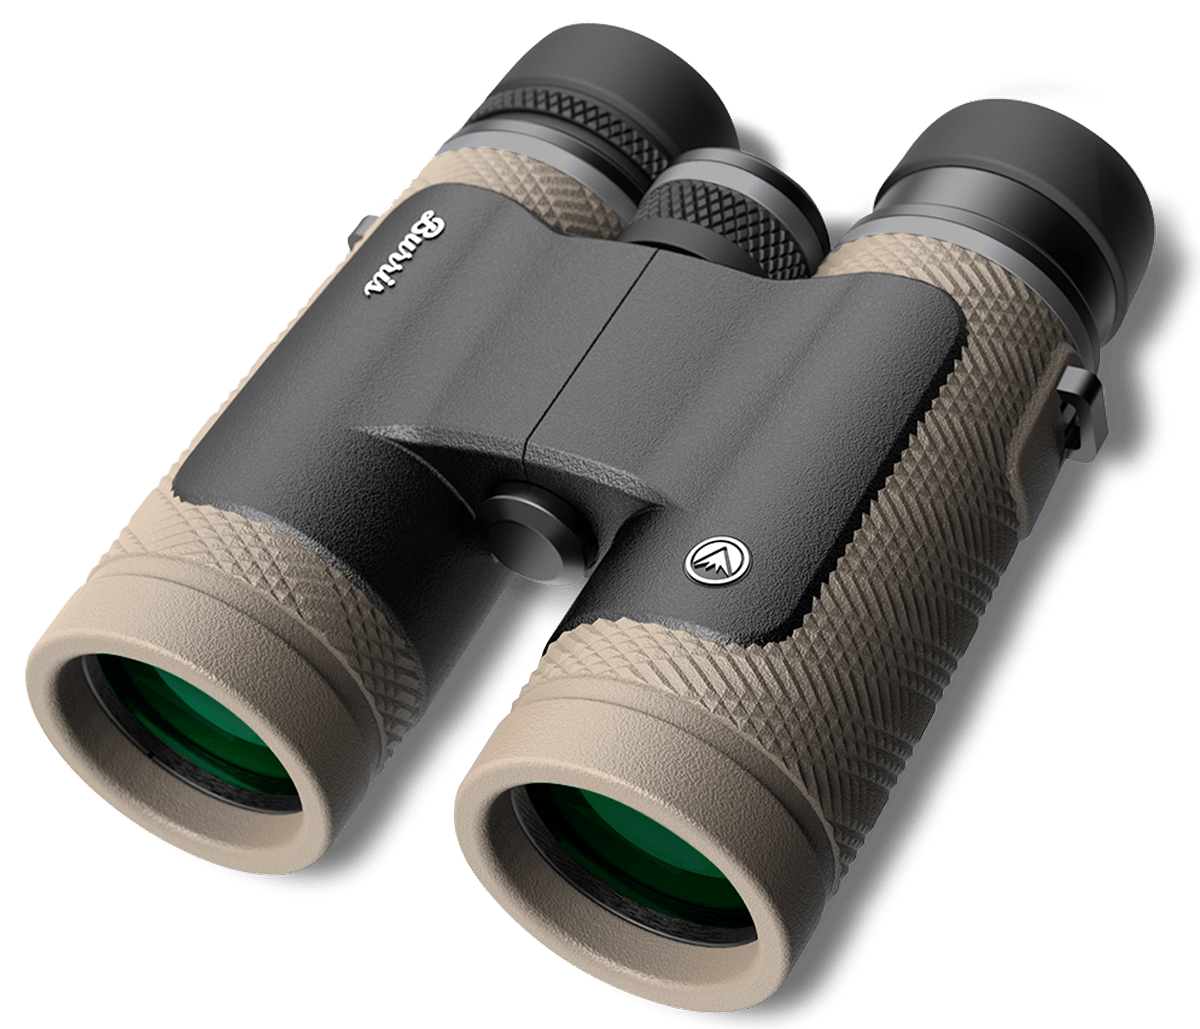 Burris Burris Signature Hd Binocular 12x50mm Optics and Accessories